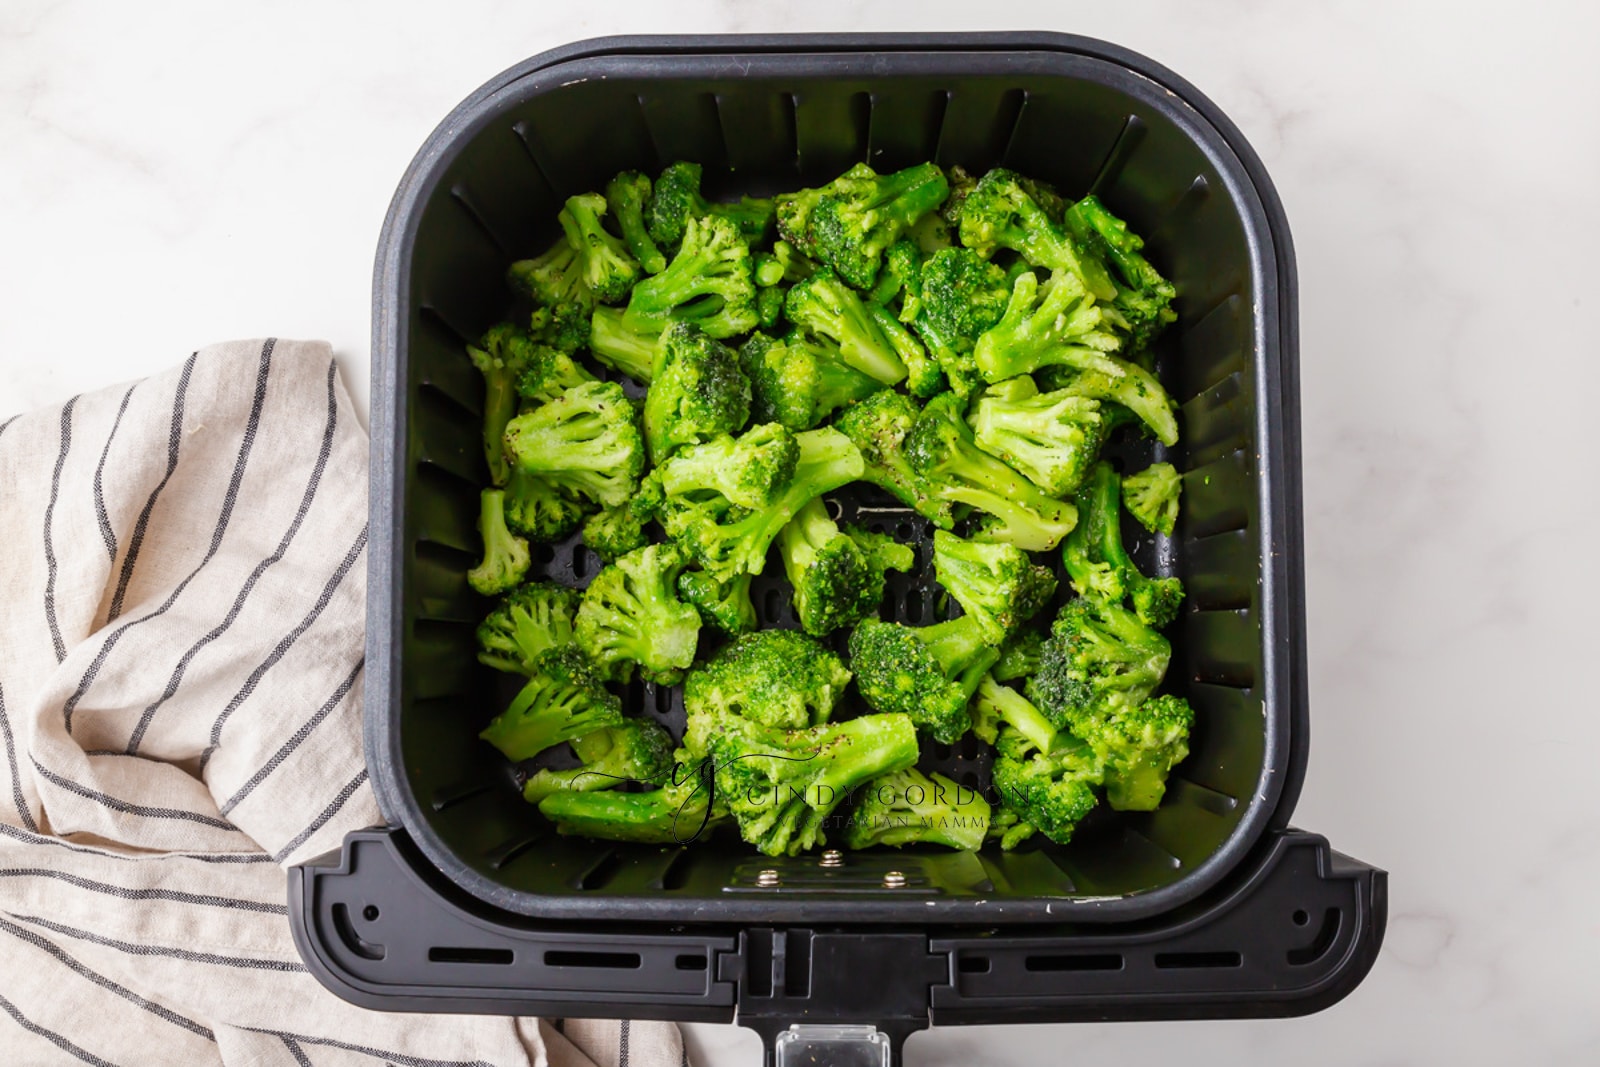 frozen green broccoli in black air fryer basket